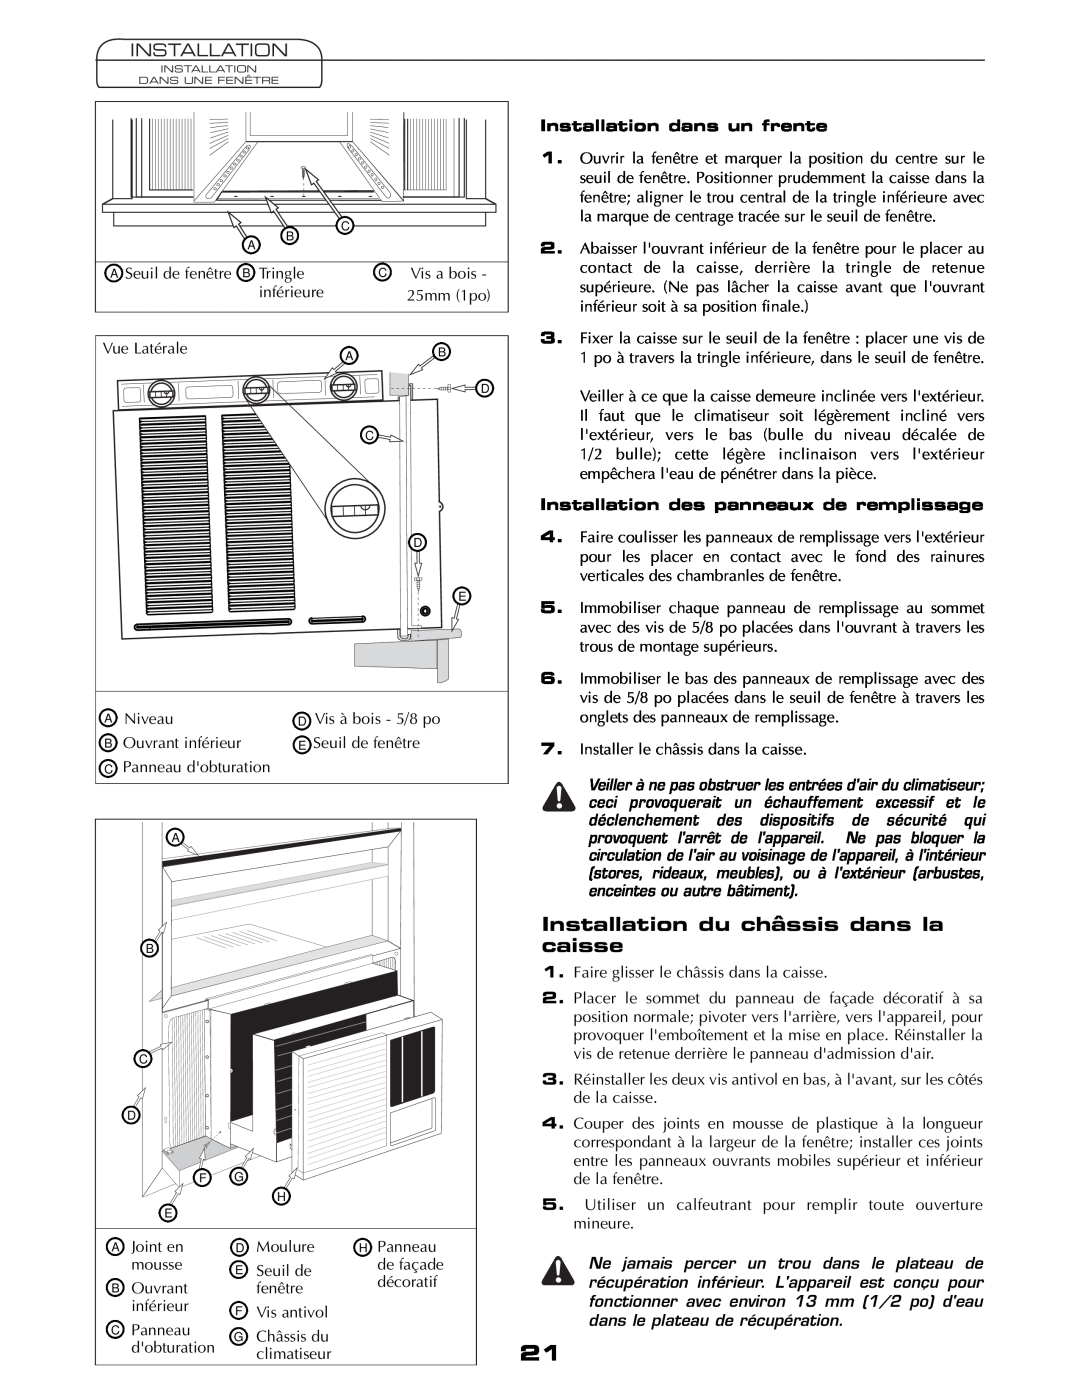 Fedders AEY08F2B important safety instructions Installation du châssis dans la caisse, Installation dans un frente 